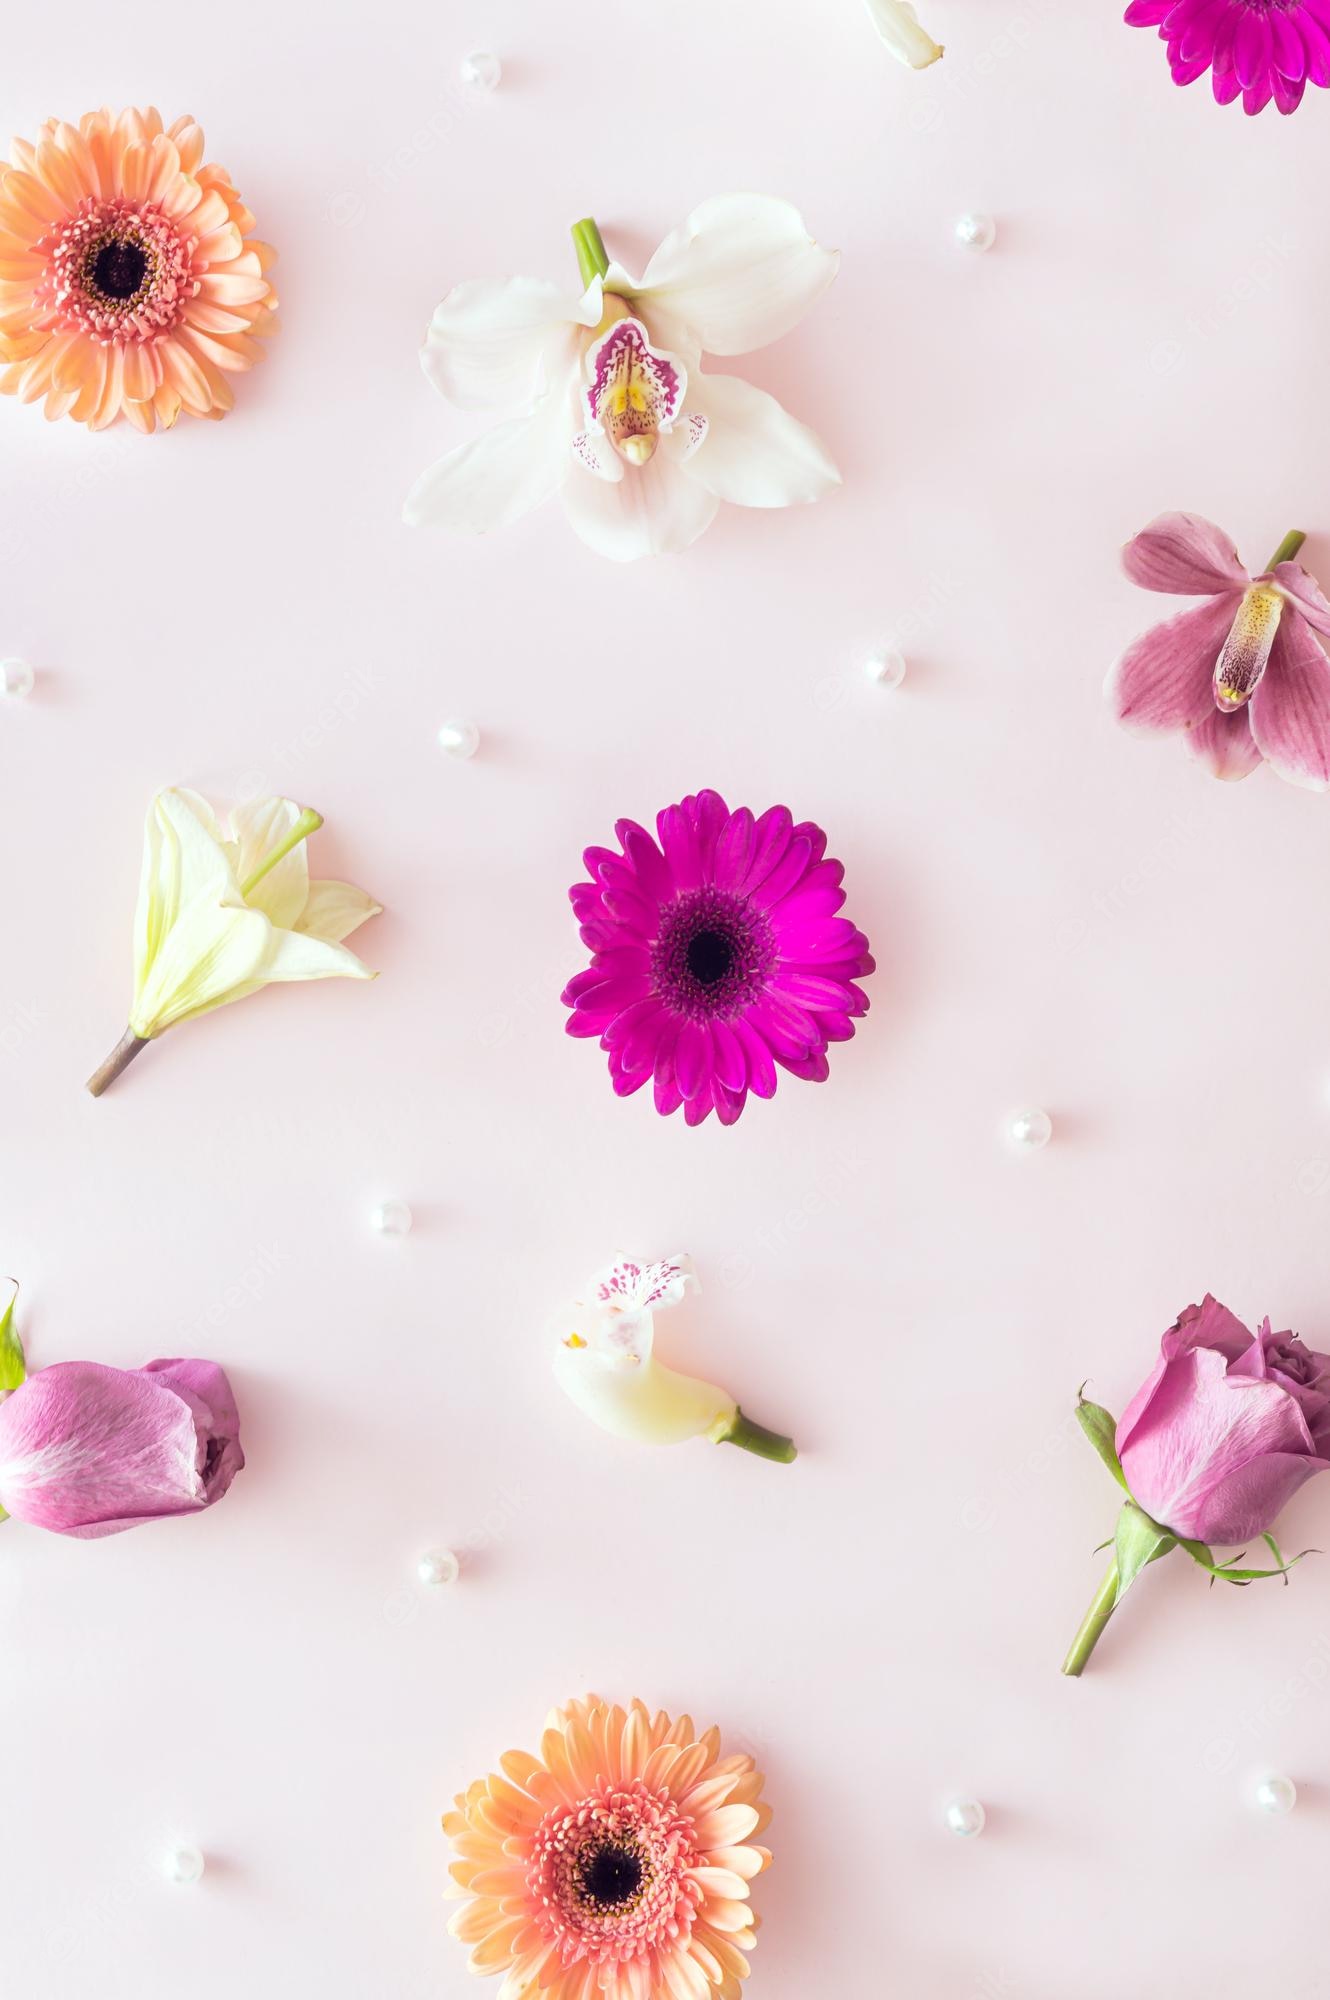 Premium Photo. Spring flower arrangement on a pastel pink background vibrant aesthetic flower wallpaper